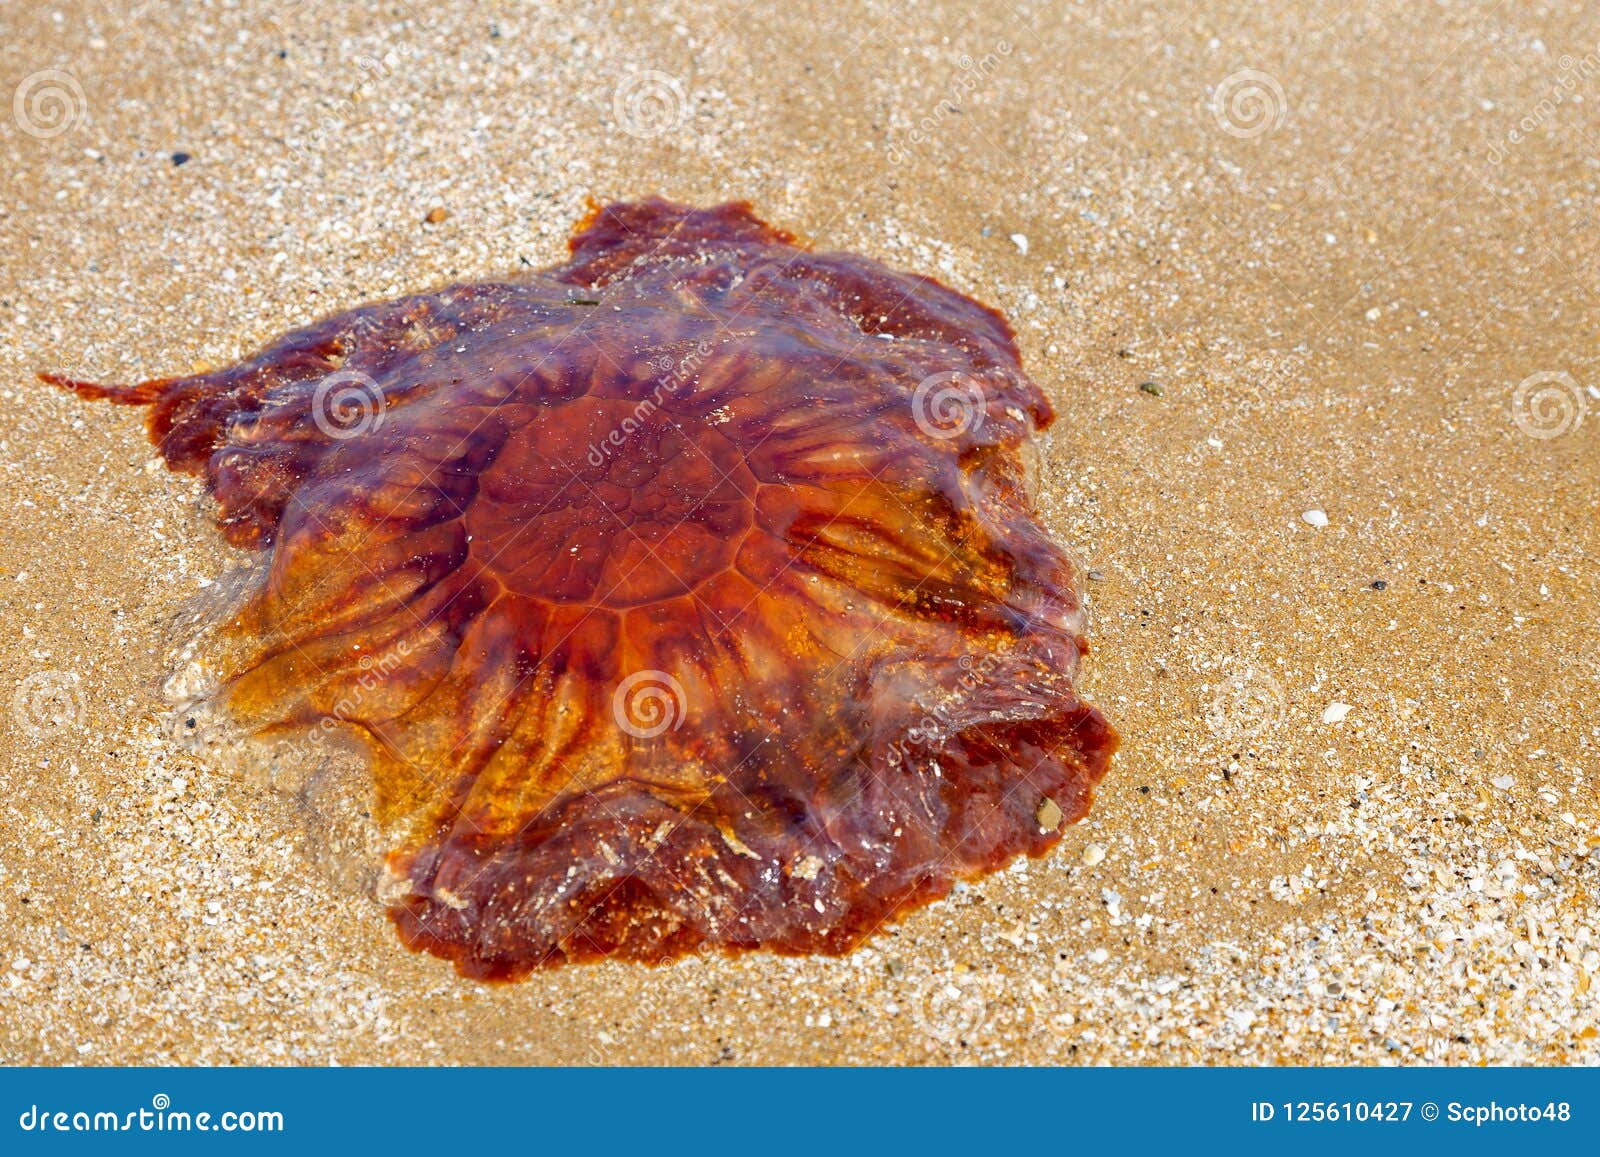 Lions mane jellyfish stock image. Image of ocean, toxic - 125610427